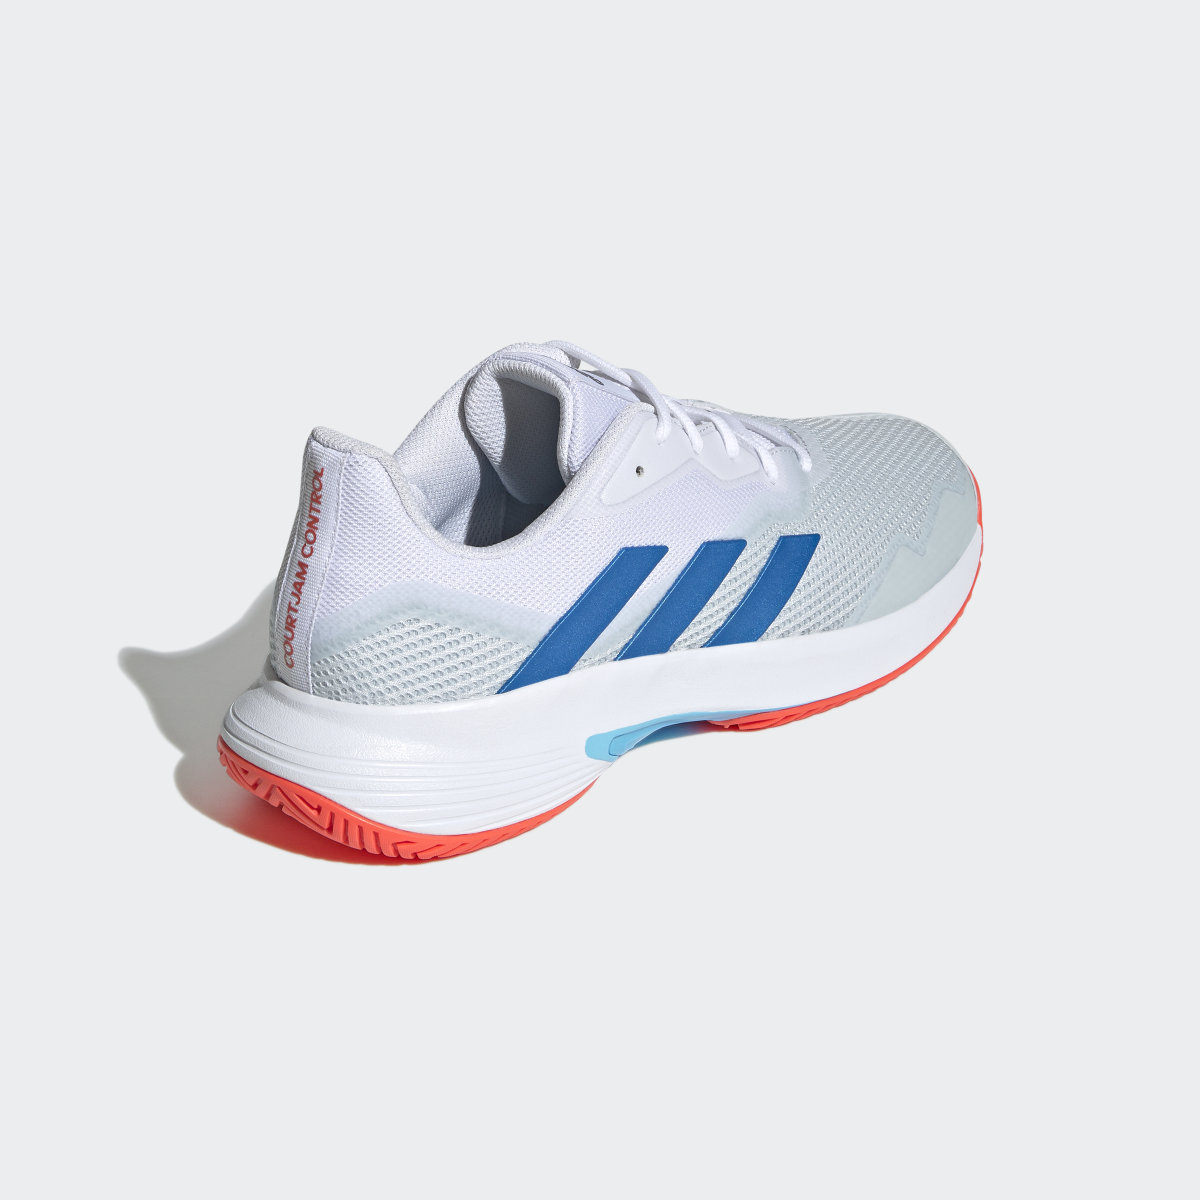 Adidas Courtjam Control Tennis Shoes. 6